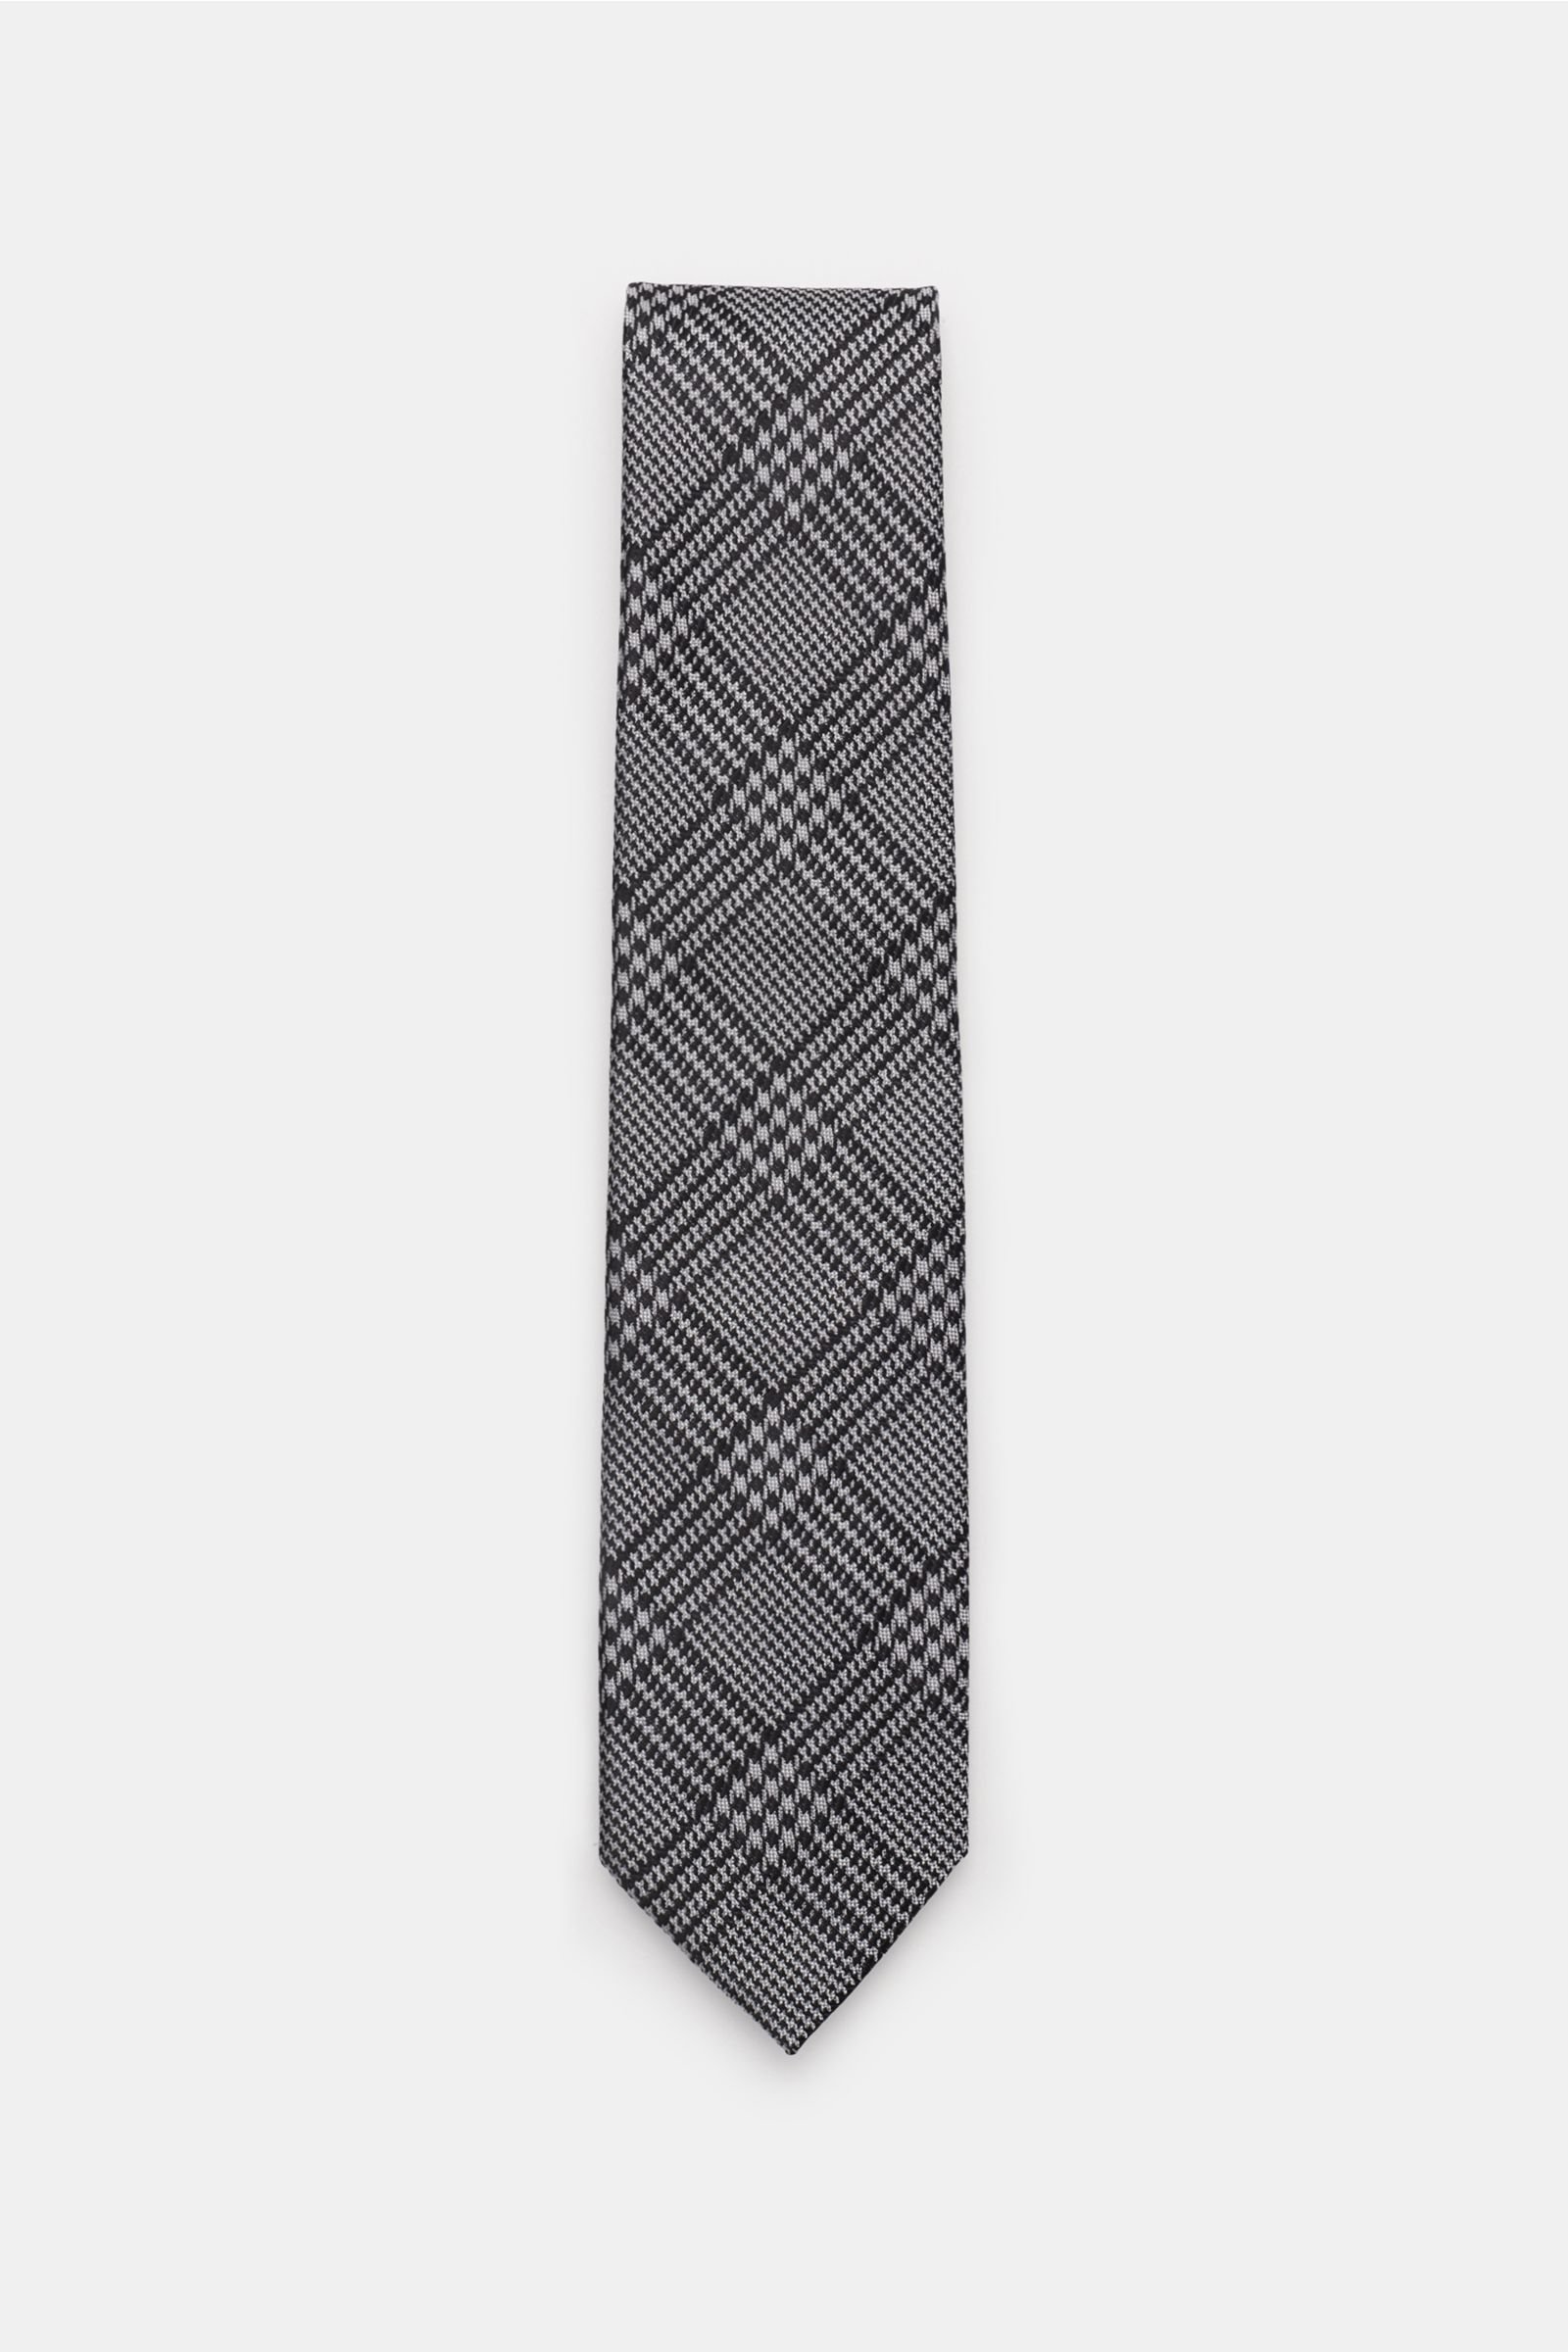 Silk tie light grey/black checked